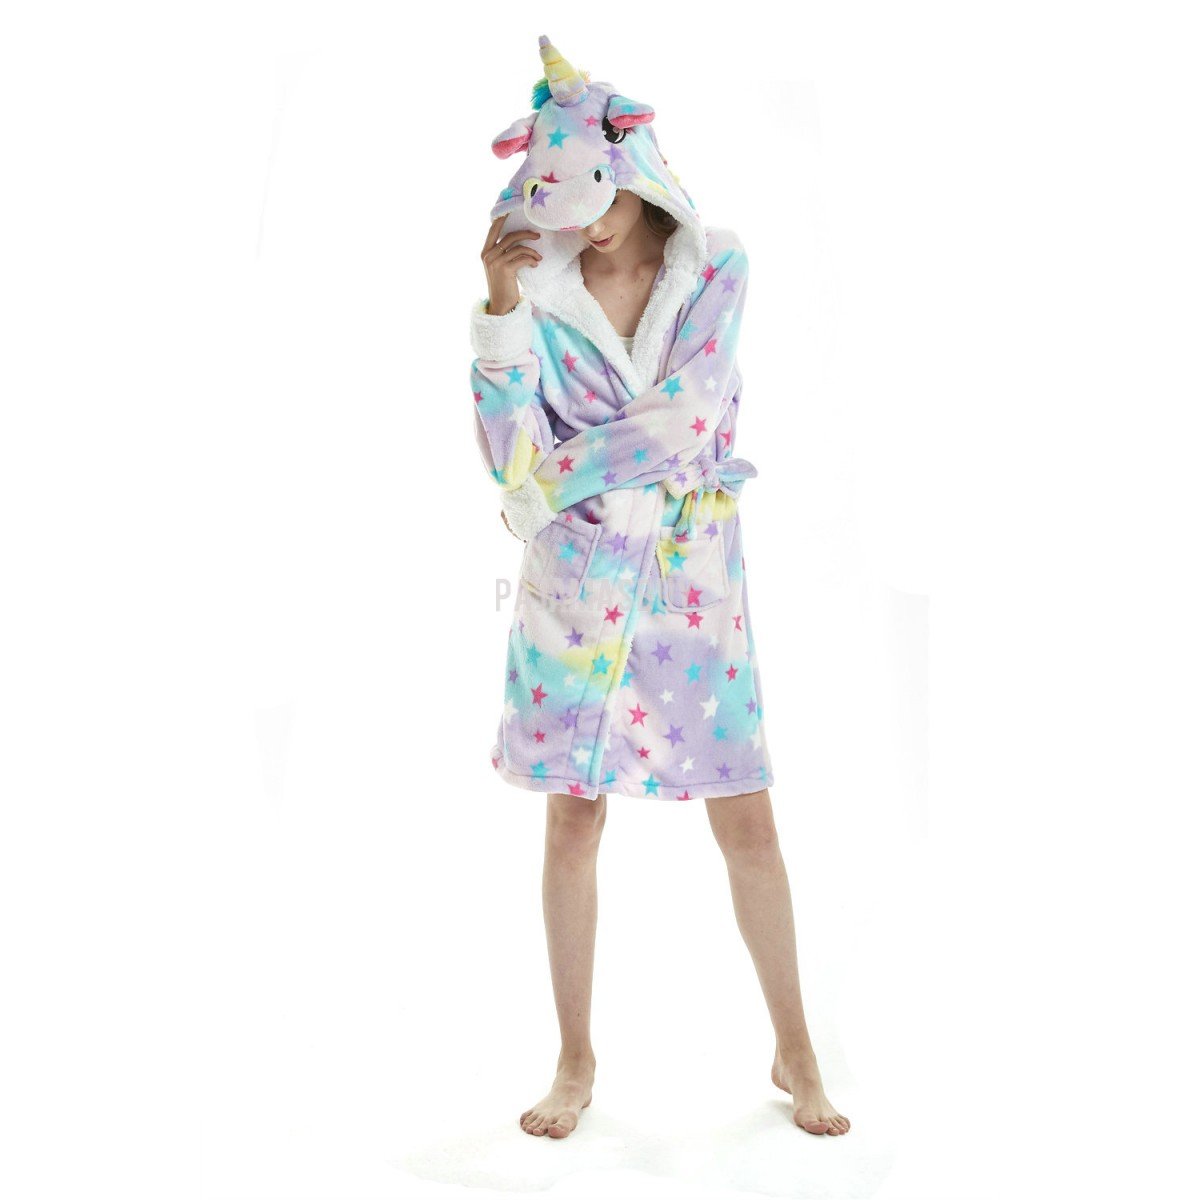 Onesie World Unisex Animal Pyjamas - Rainbow Star Unicorn Adult Bathrobe (Cosplay / Nightwear